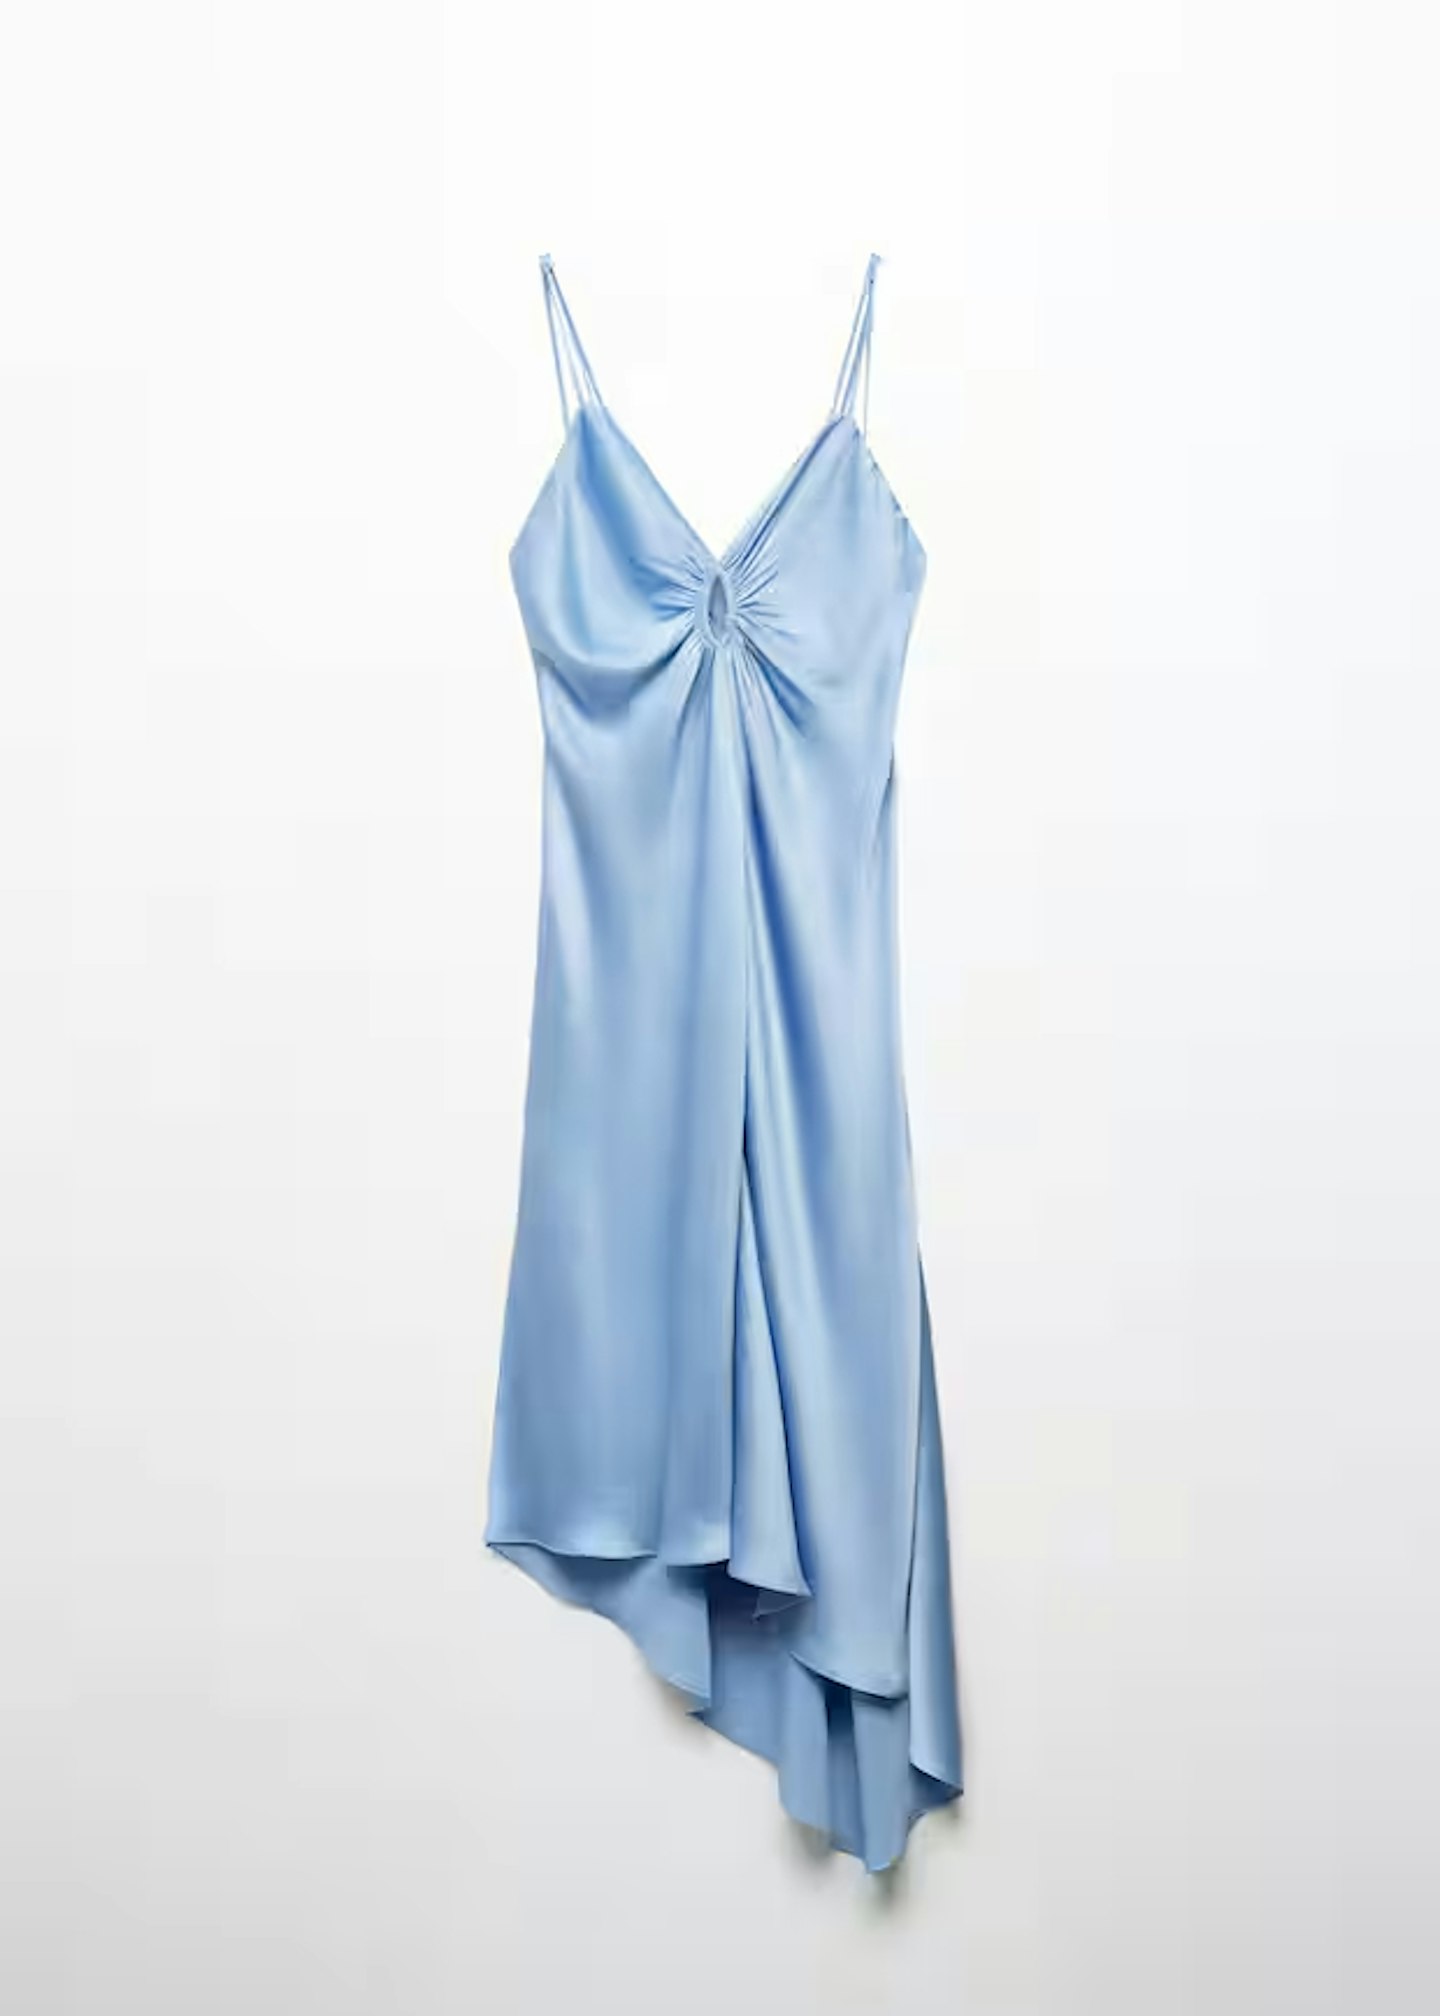 vb mango blue dress